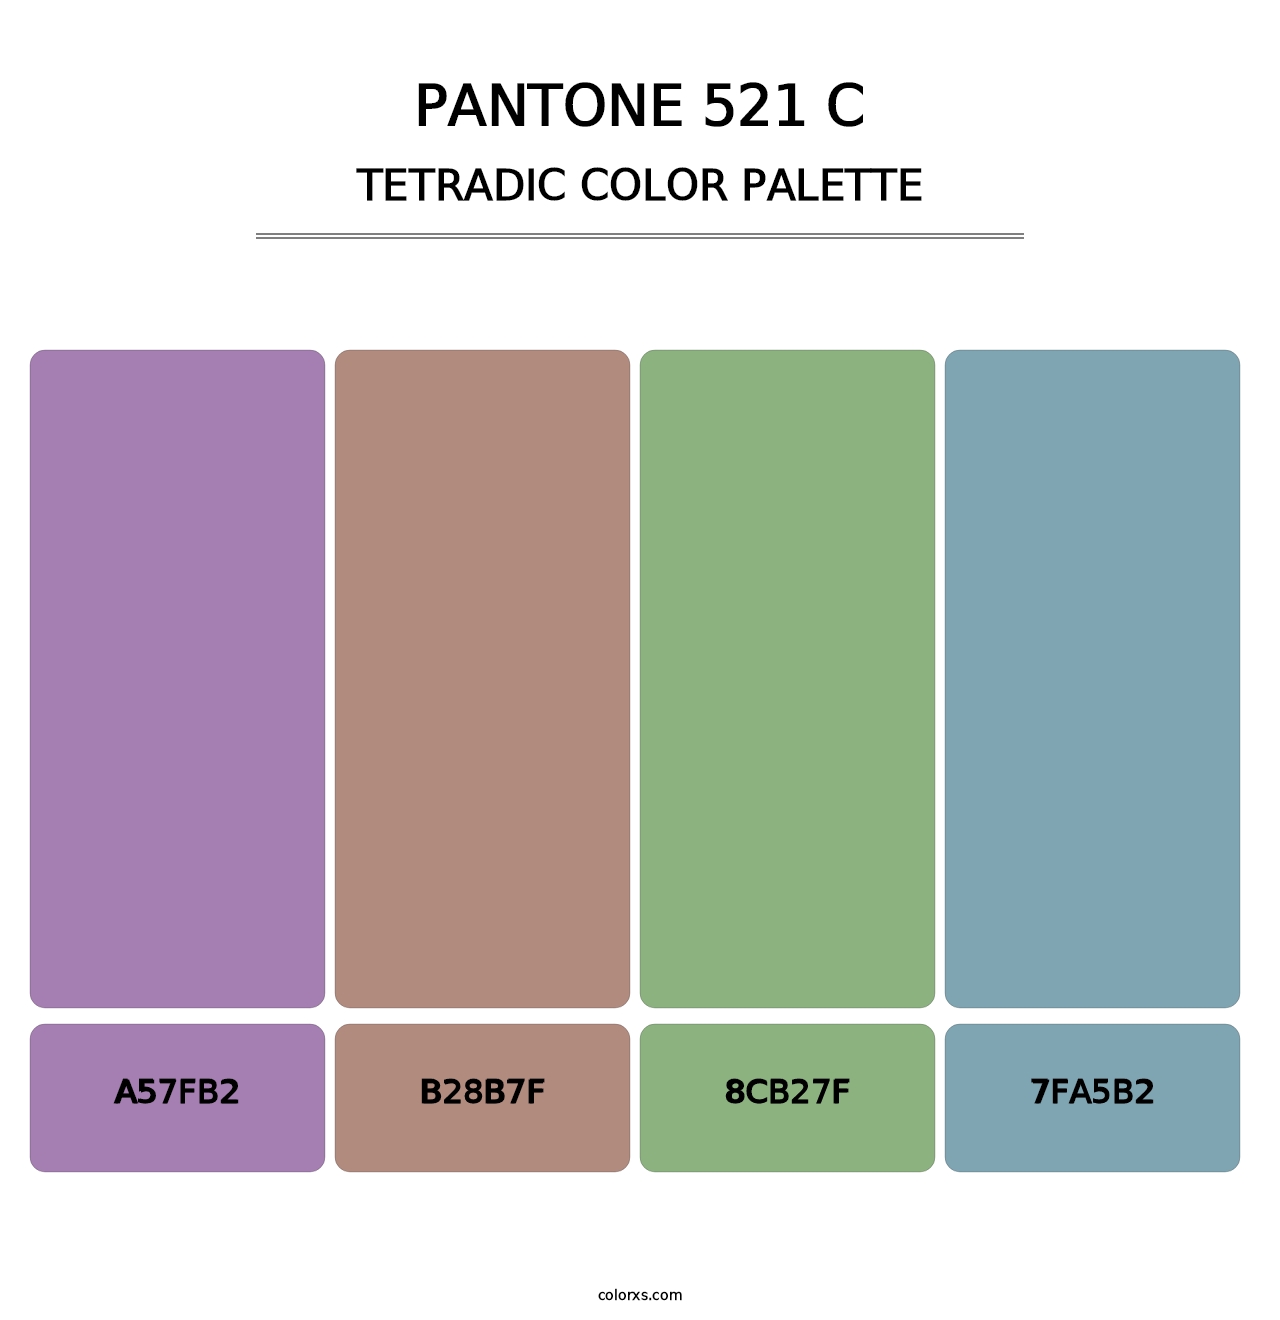 PANTONE 521 C - Tetradic Color Palette